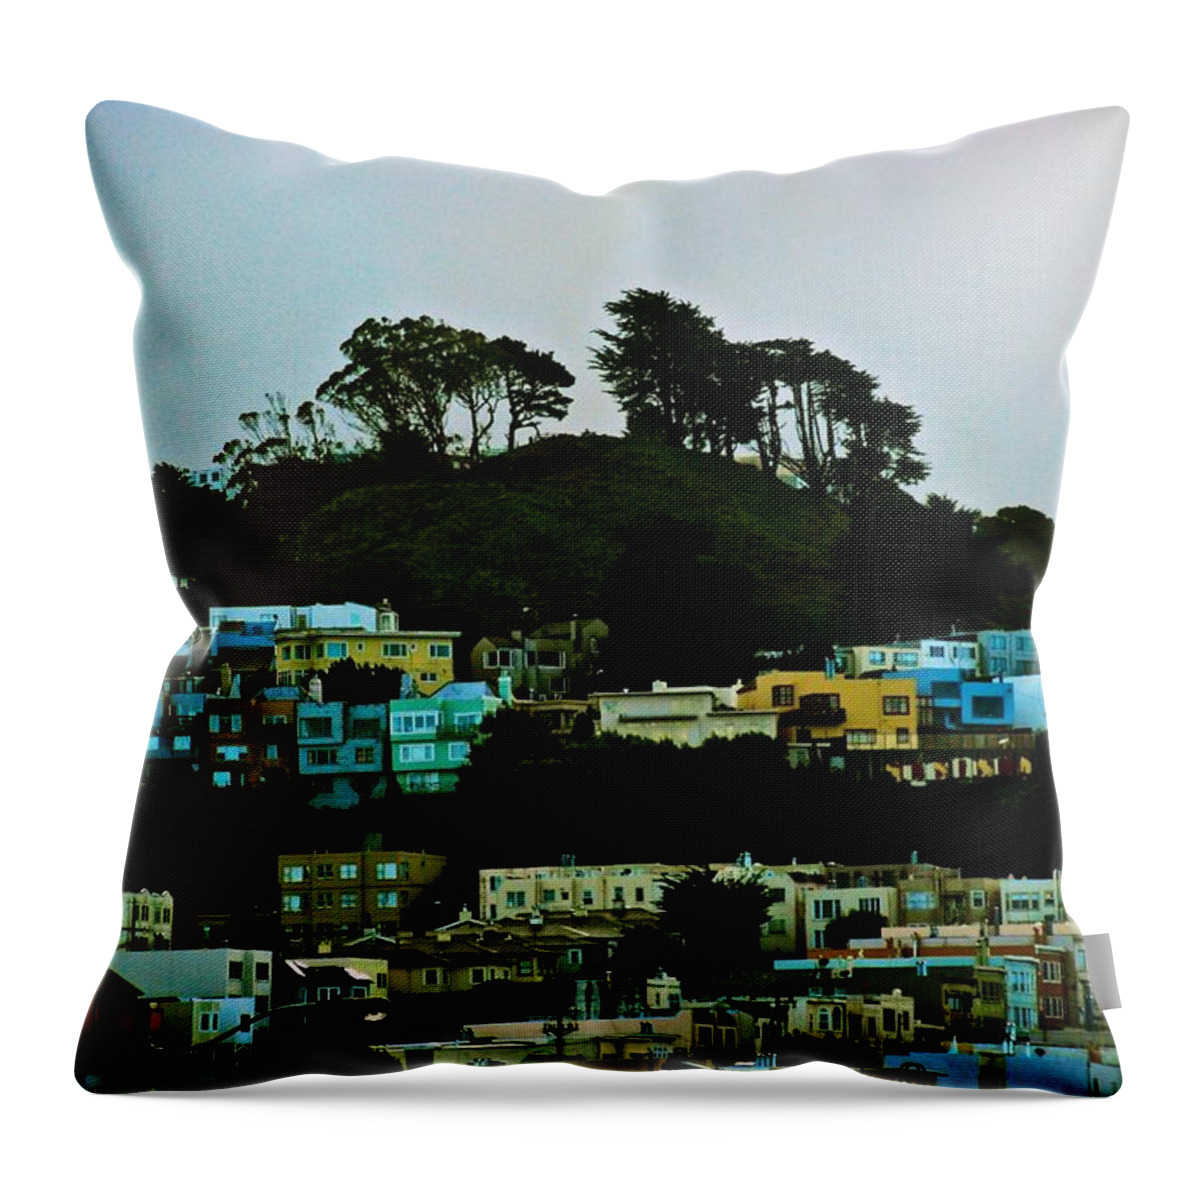 San Francisco Throw Pillow featuring the photograph San Francisco Neighborhood by Eric Tressler